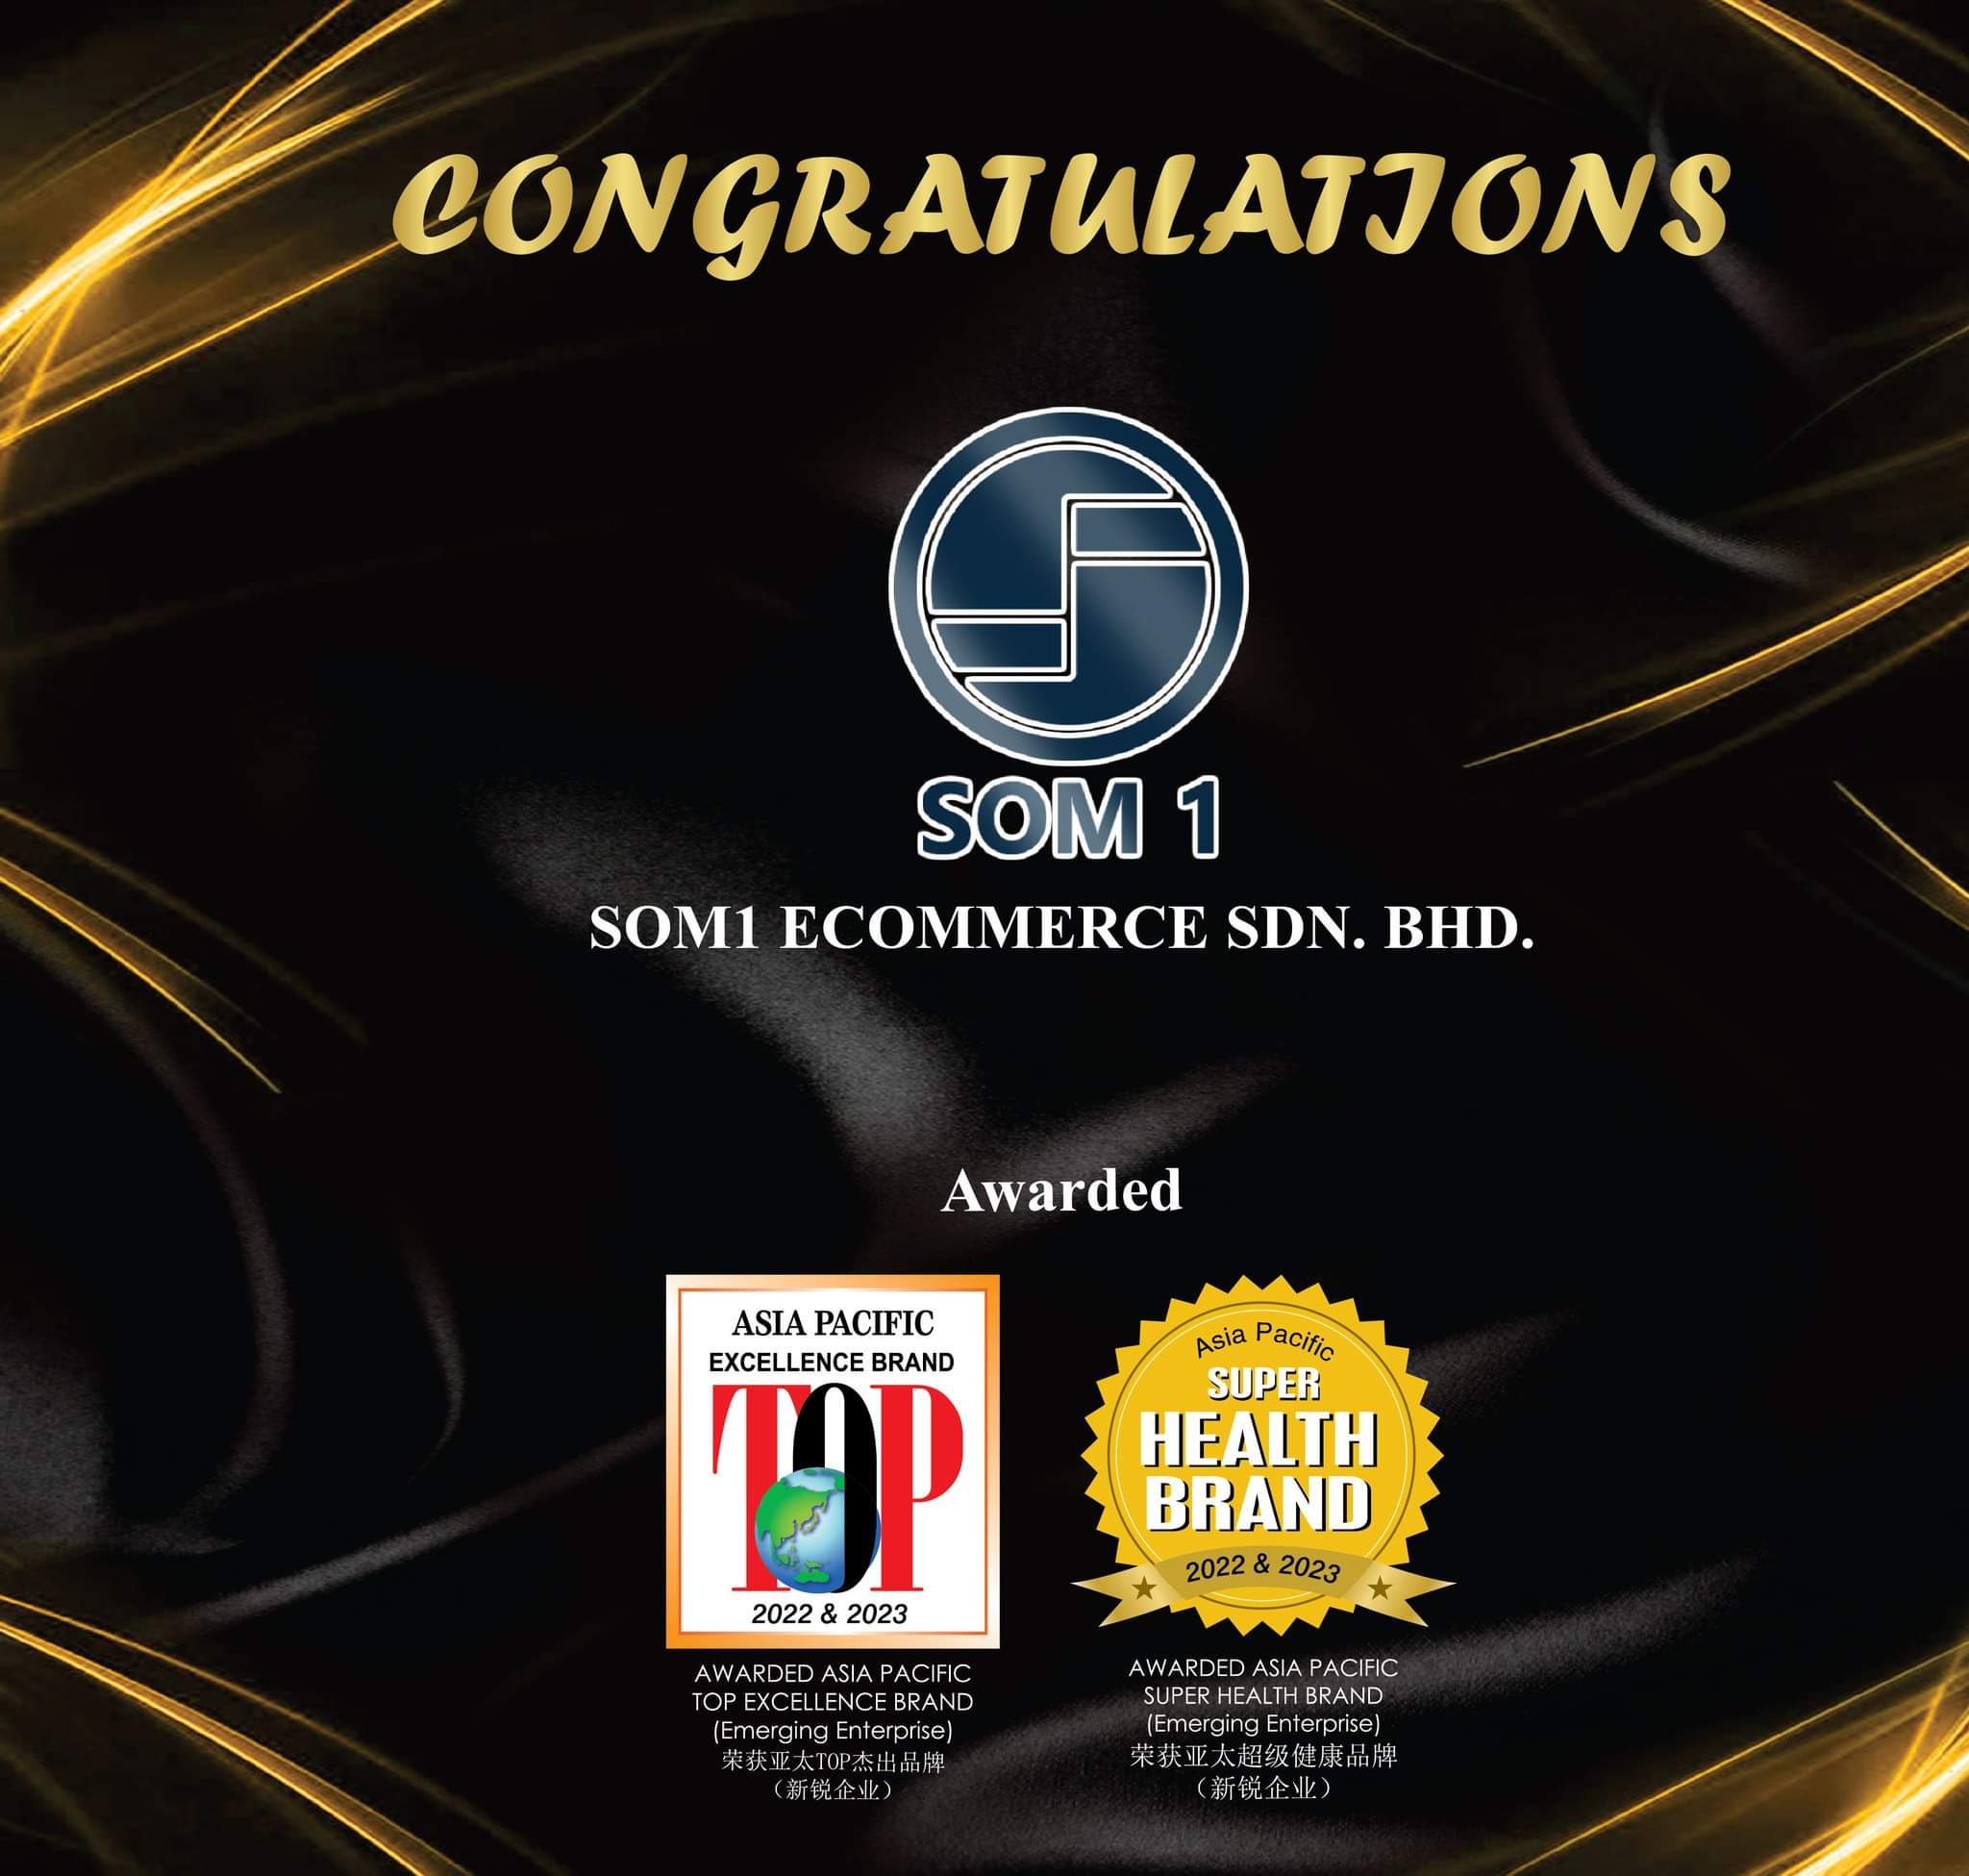 SOM1 ECOMMERCE SDN. BHD. 一举荣获亚太超级健康品牌与亚太TOP杰出品牌两大奖项